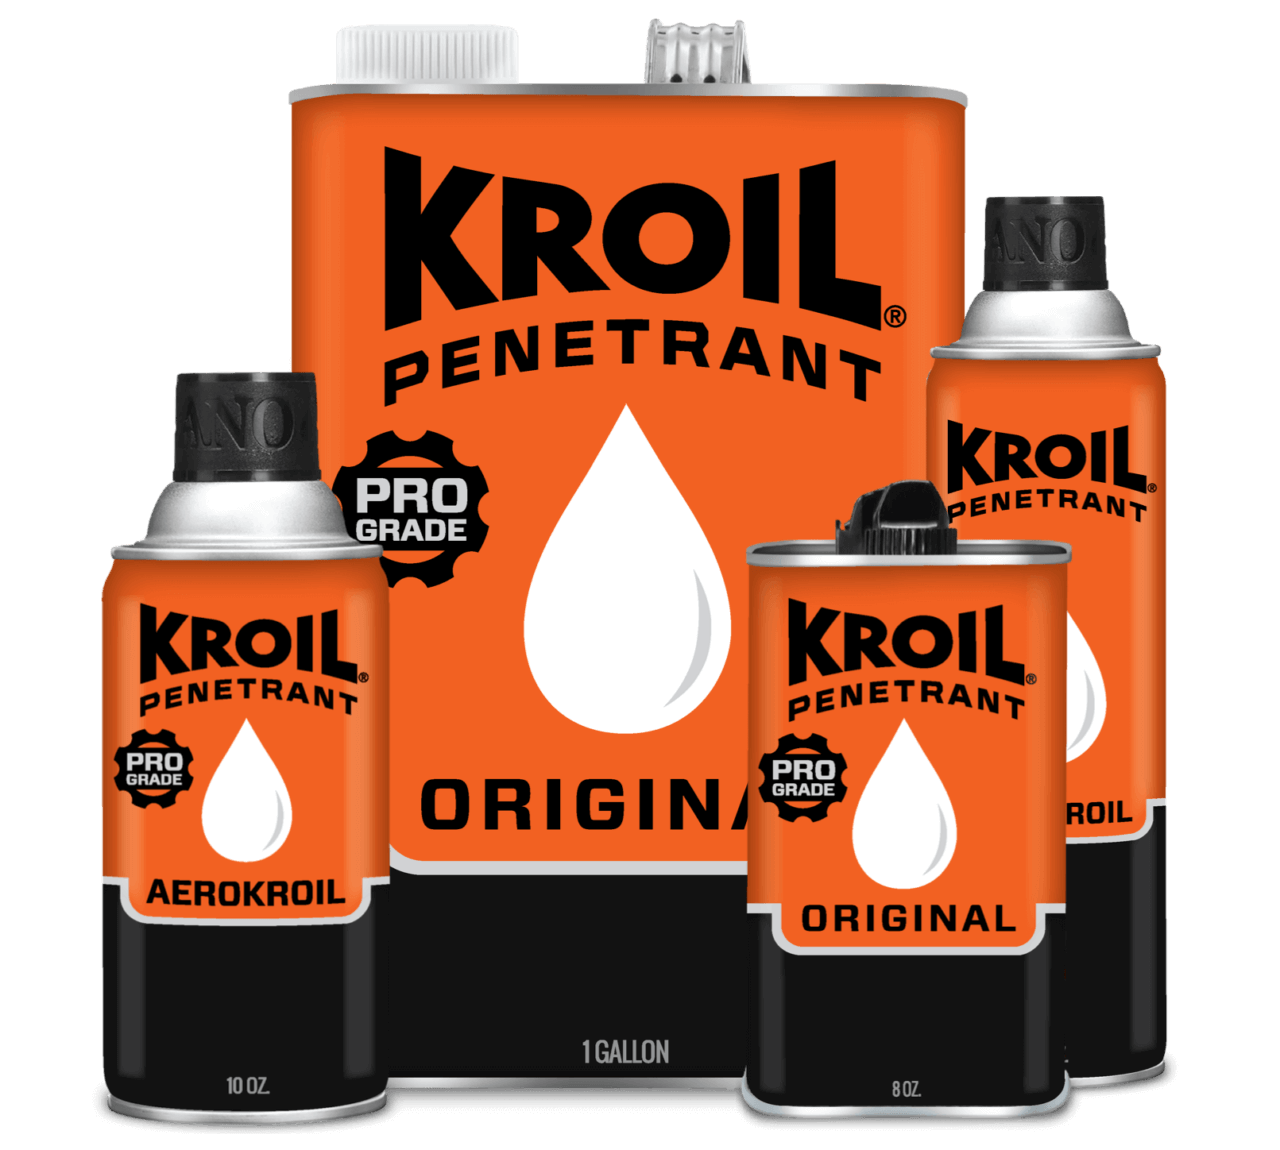 Kroil Original Penetrant Bundle